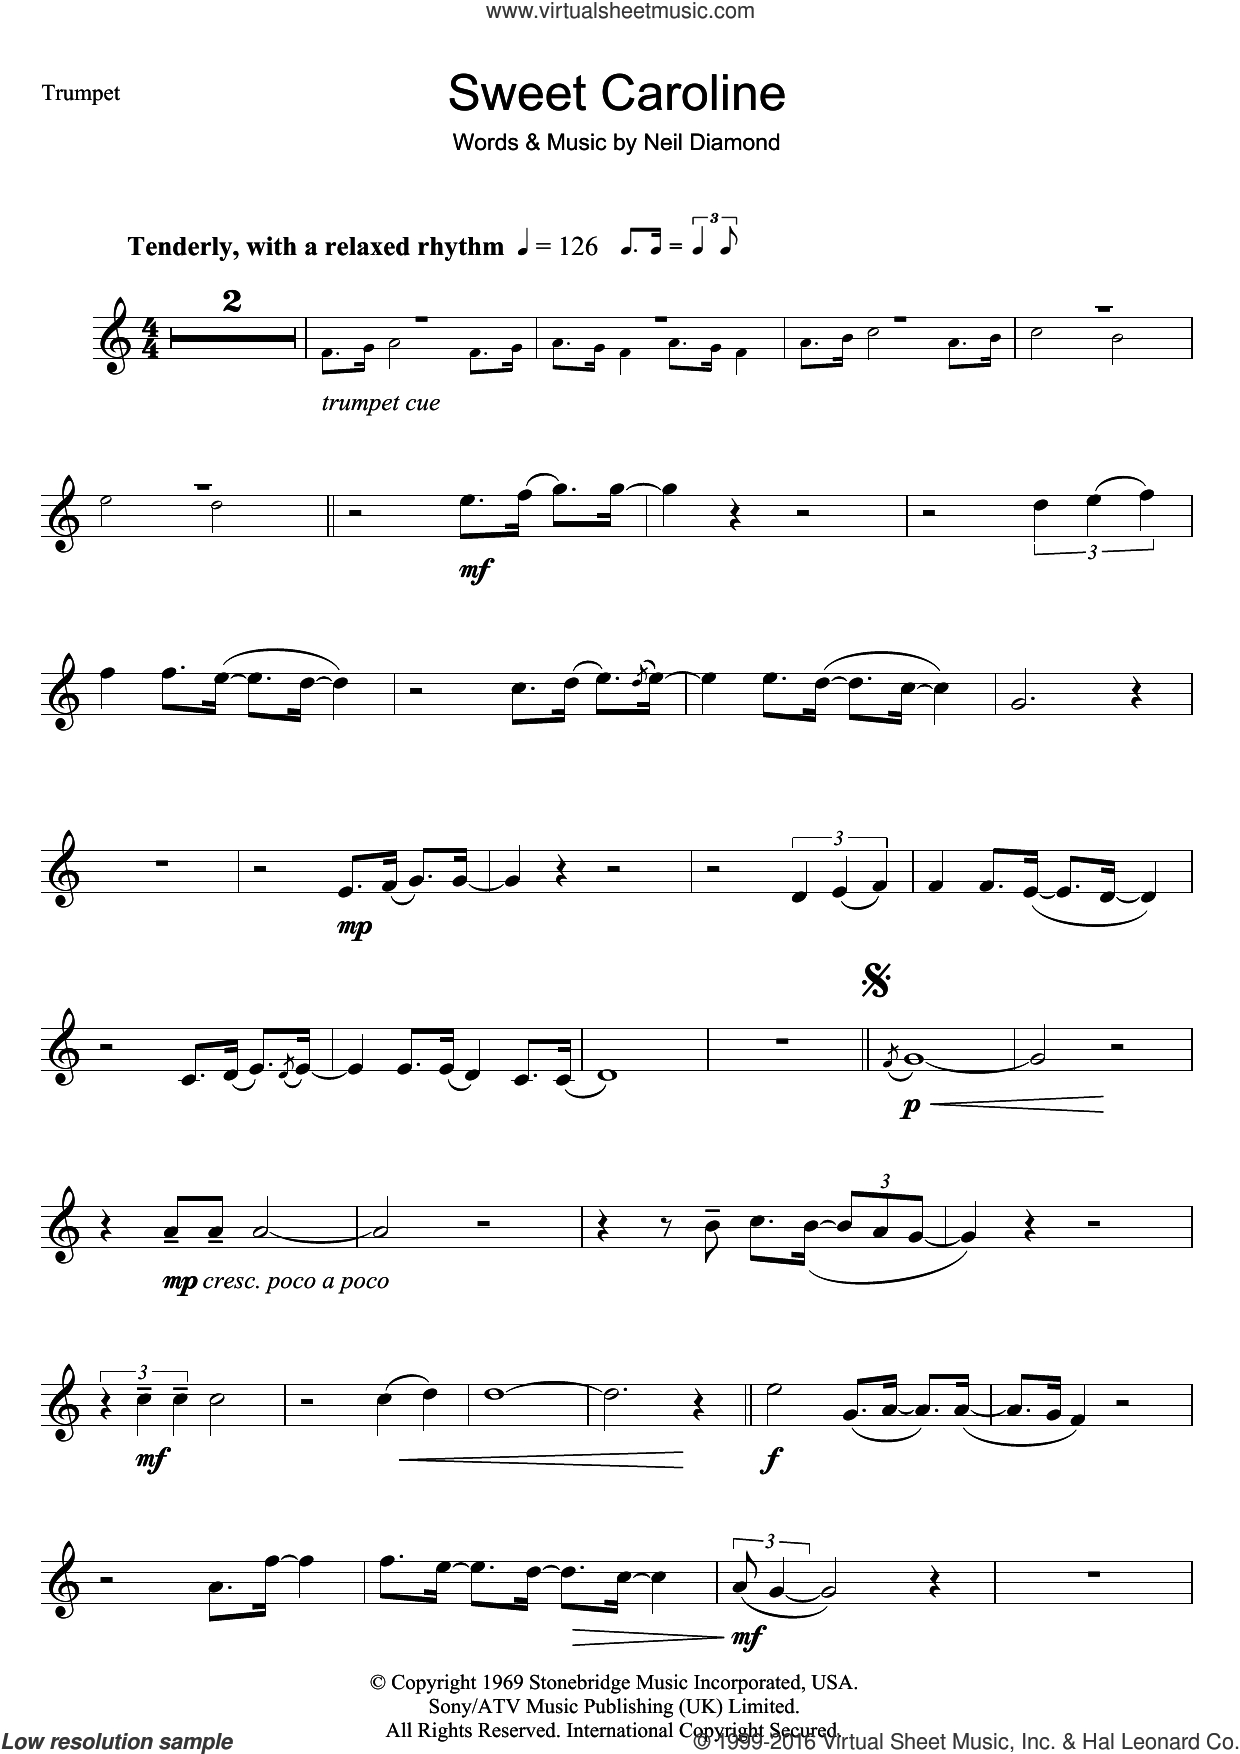 Diamond - Sweet Caroline Sheet Music For Trumpet Solo [Pdf] - Free Printable Sheet Music For Trumpet